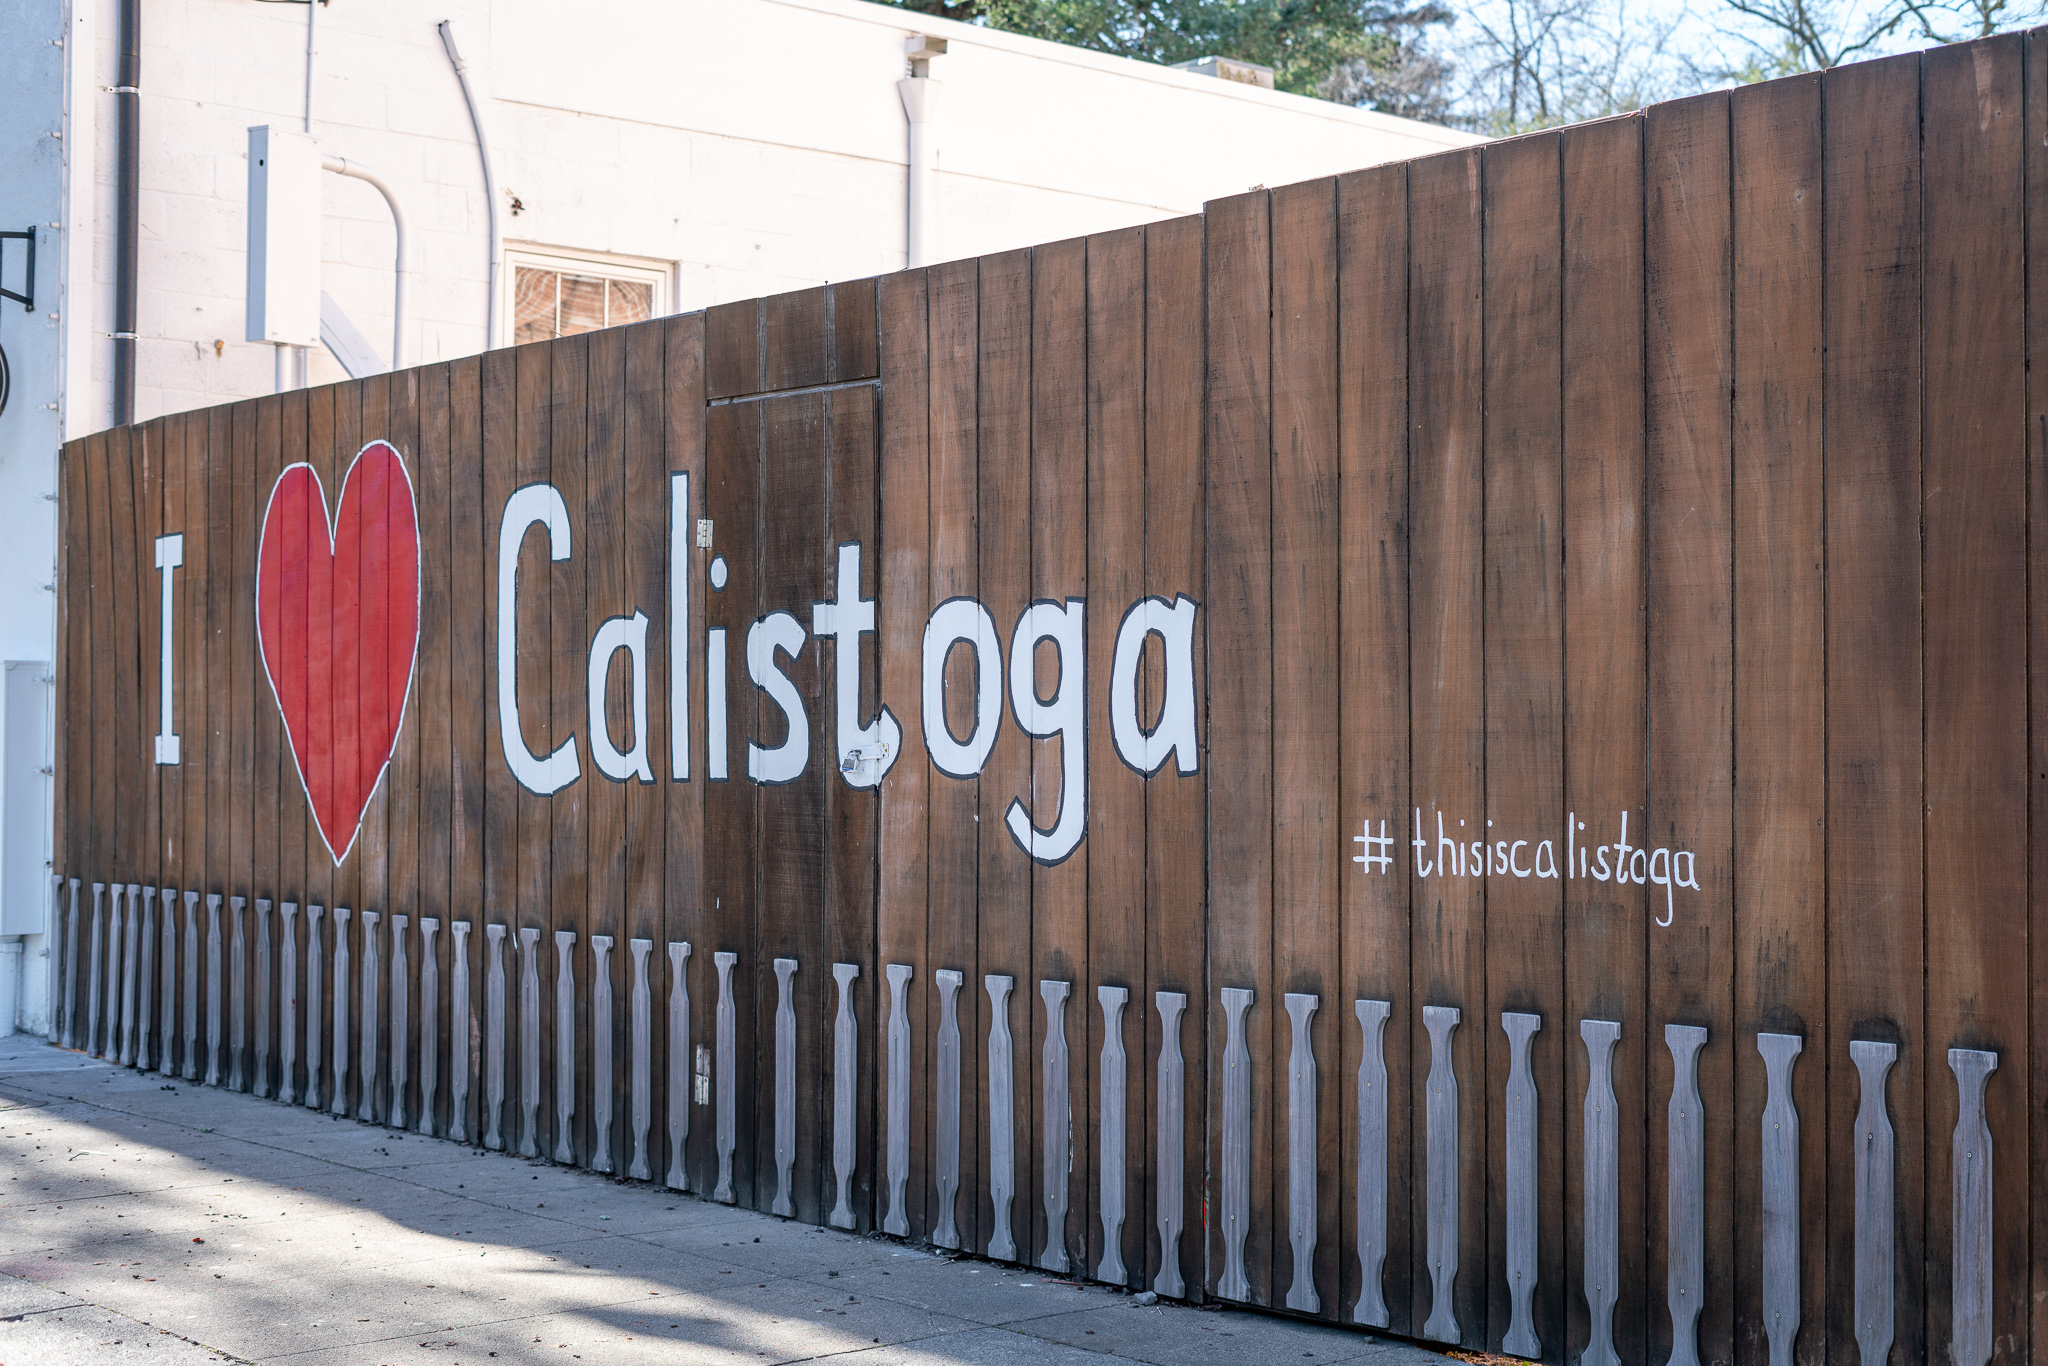 I love Calistoga mural on fence